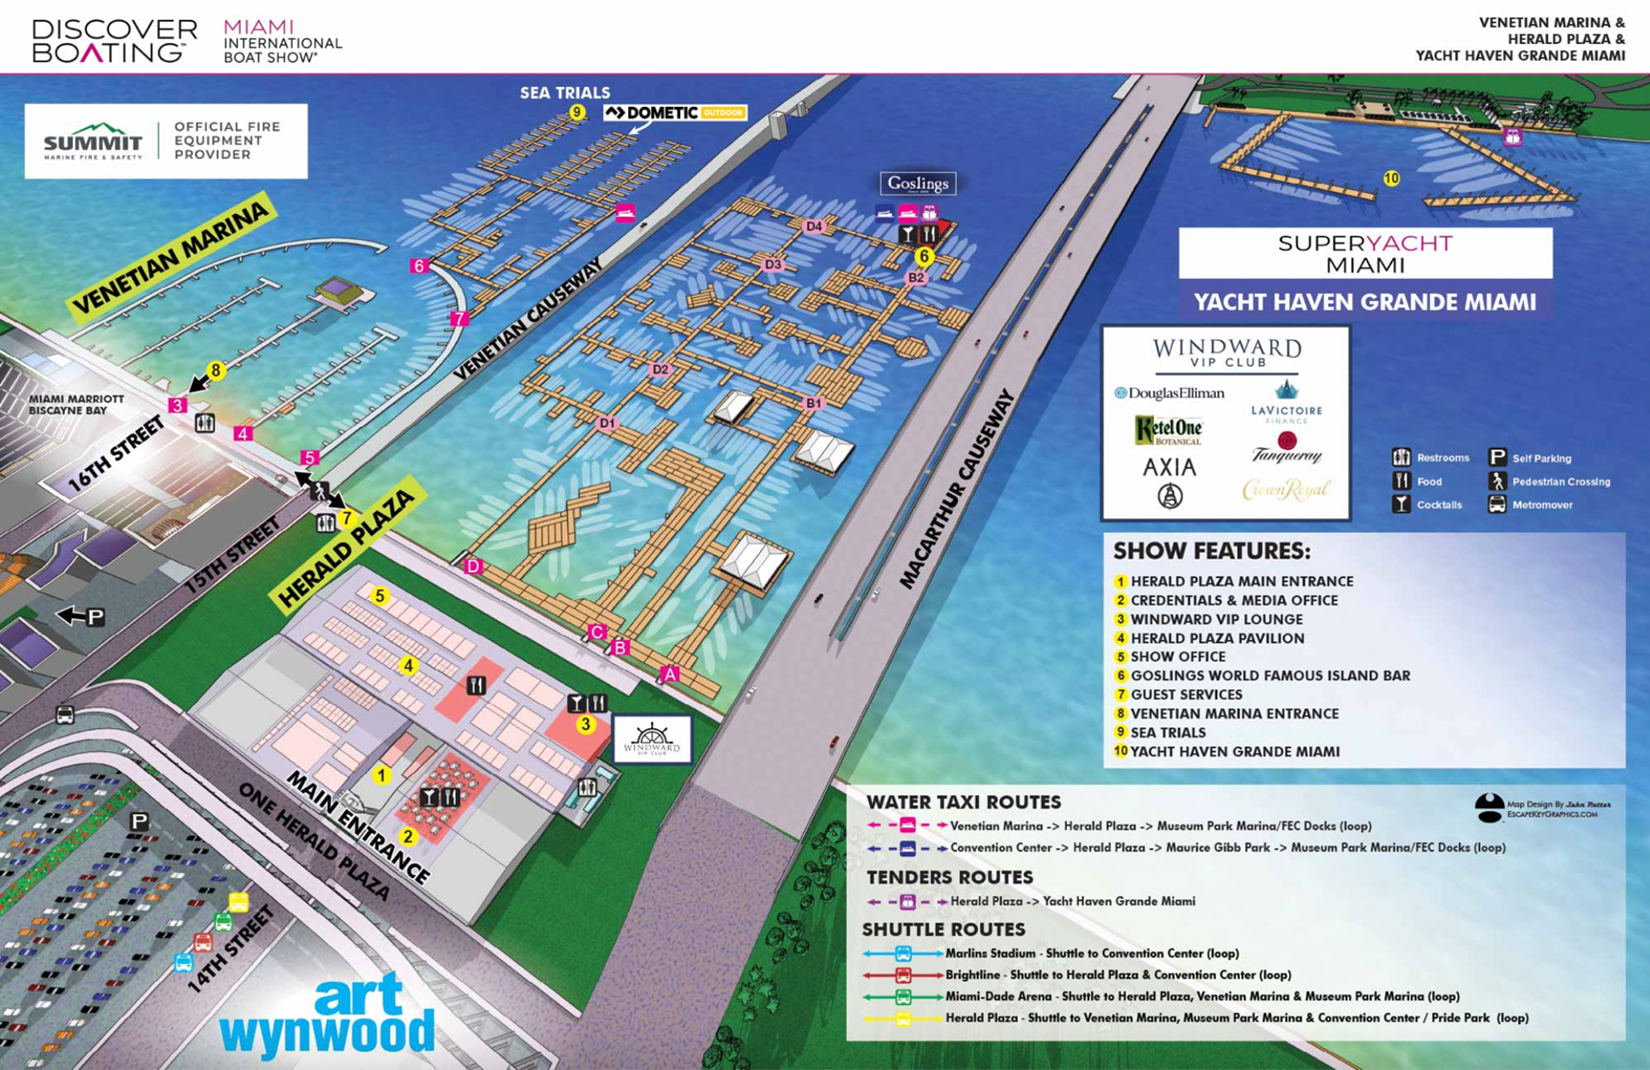 Guide to MIBS, Venetian Marina and Herald Plaza